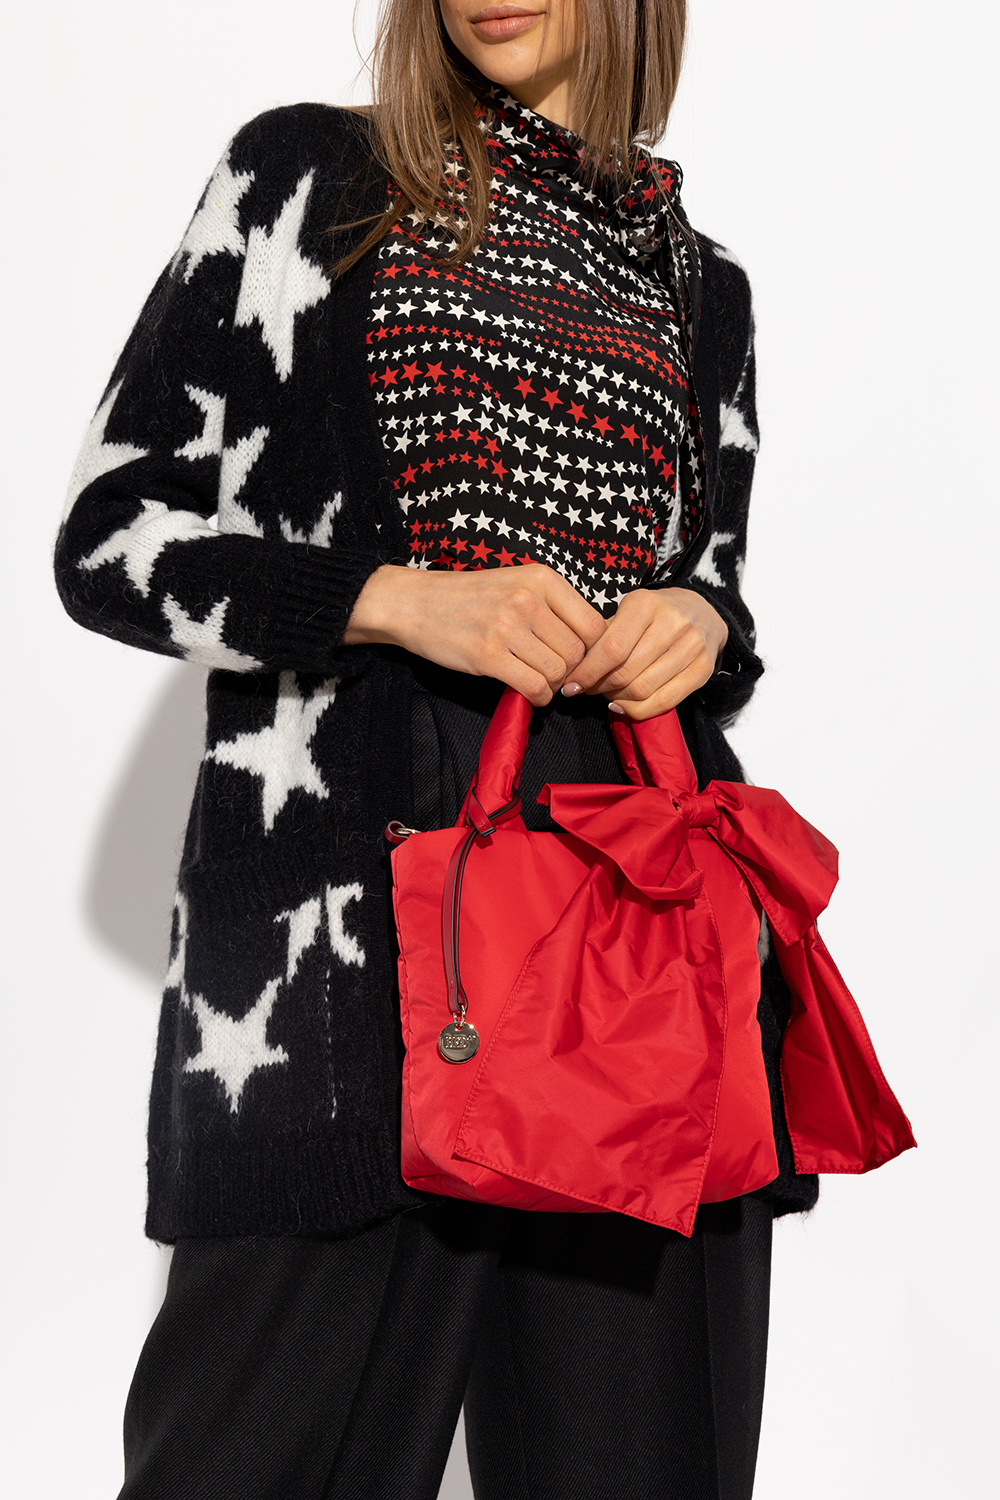 Red Valentino woman valentino garavani bags rockstud leather tote bag